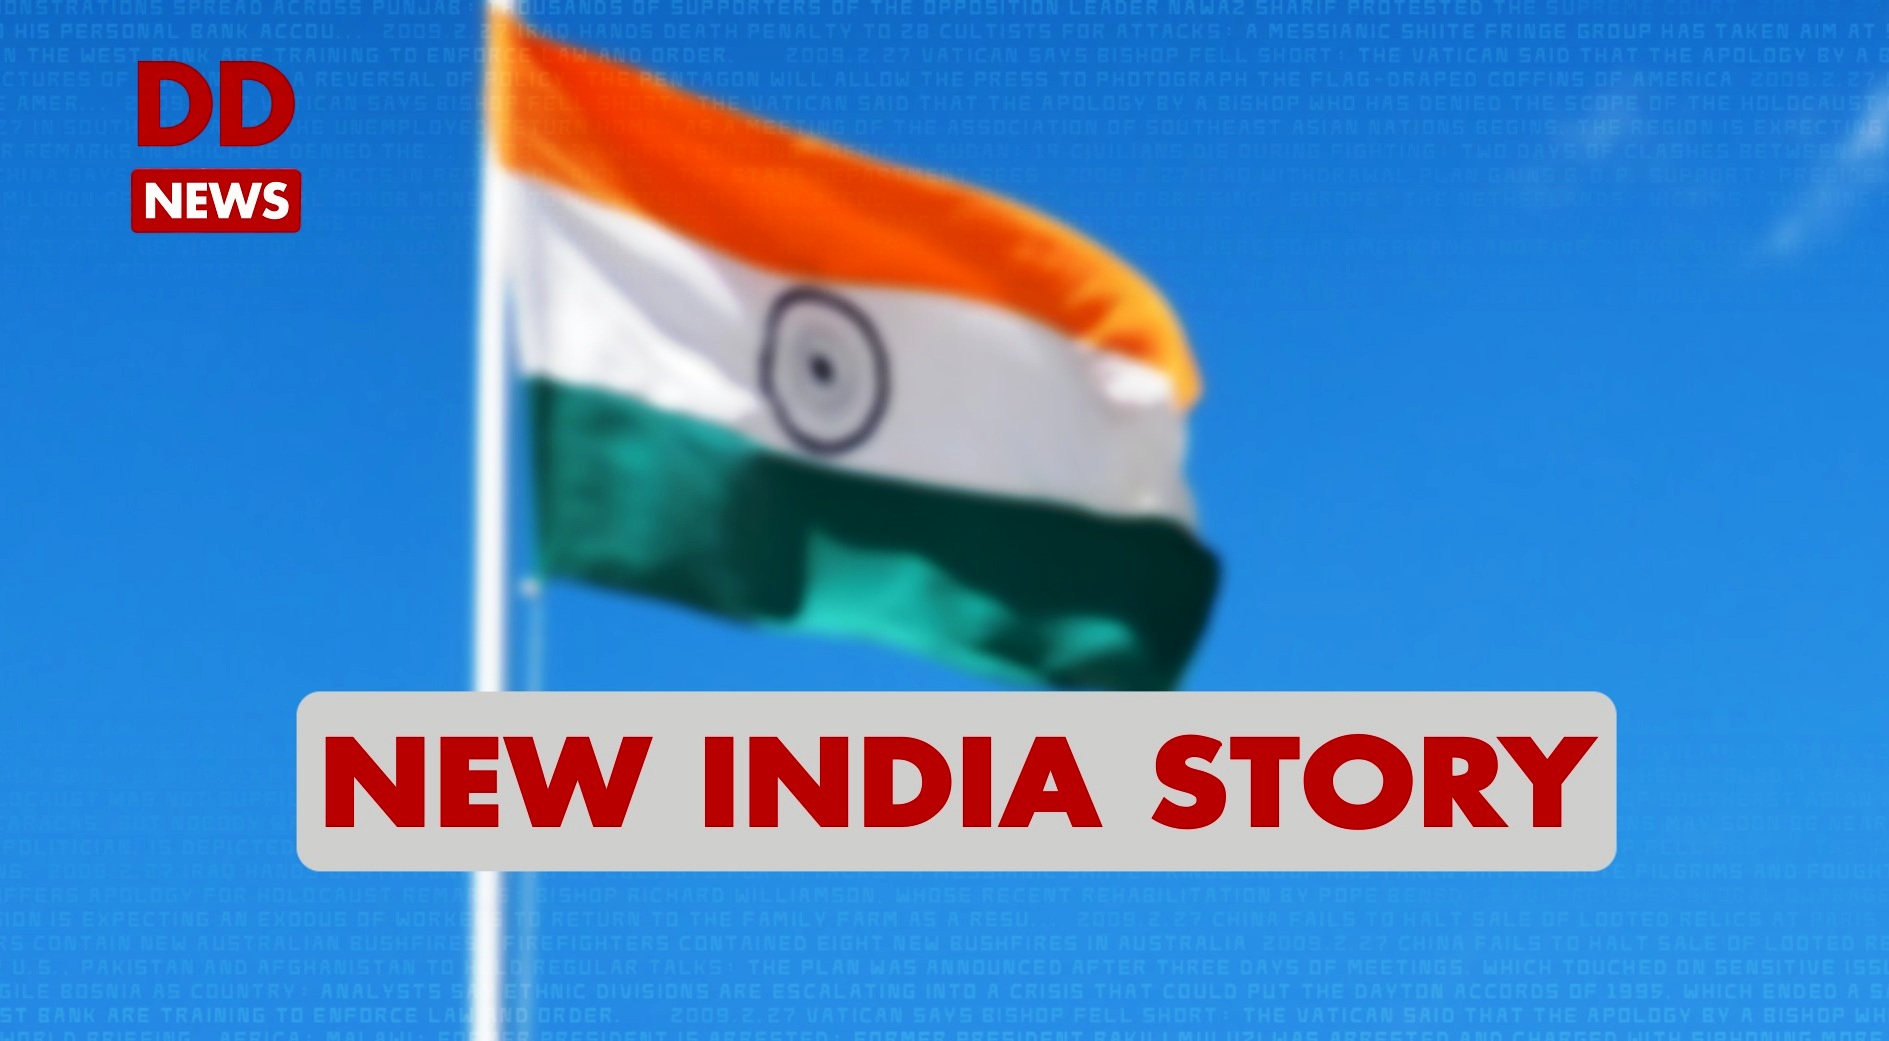 New India Story / Telegana / Wanaparthy / Pradhan Mantri Mudra Yojana